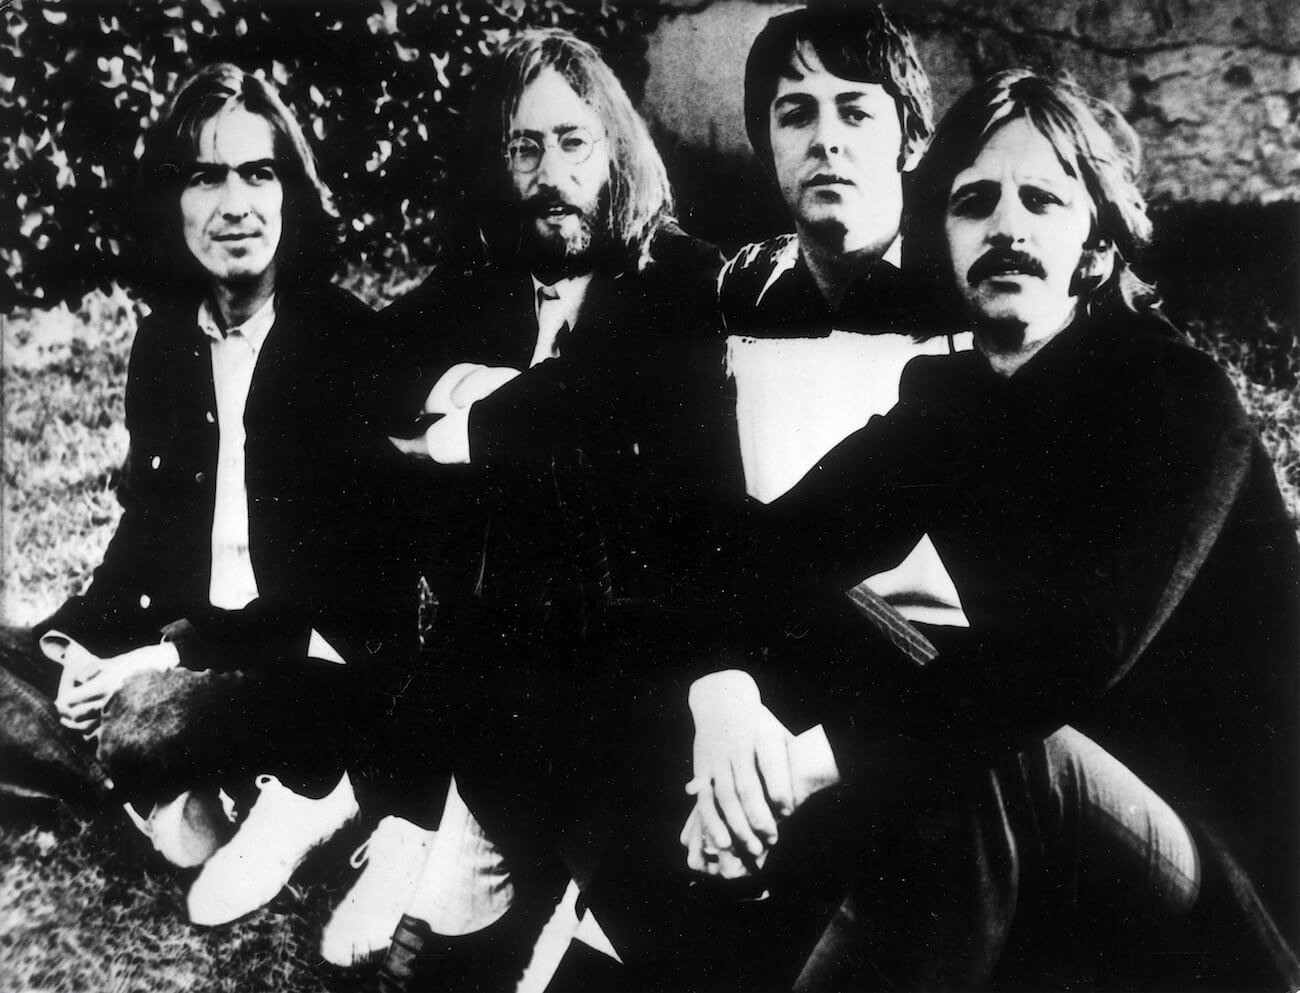 Paul McCartney and The Beatles posing in 1970.